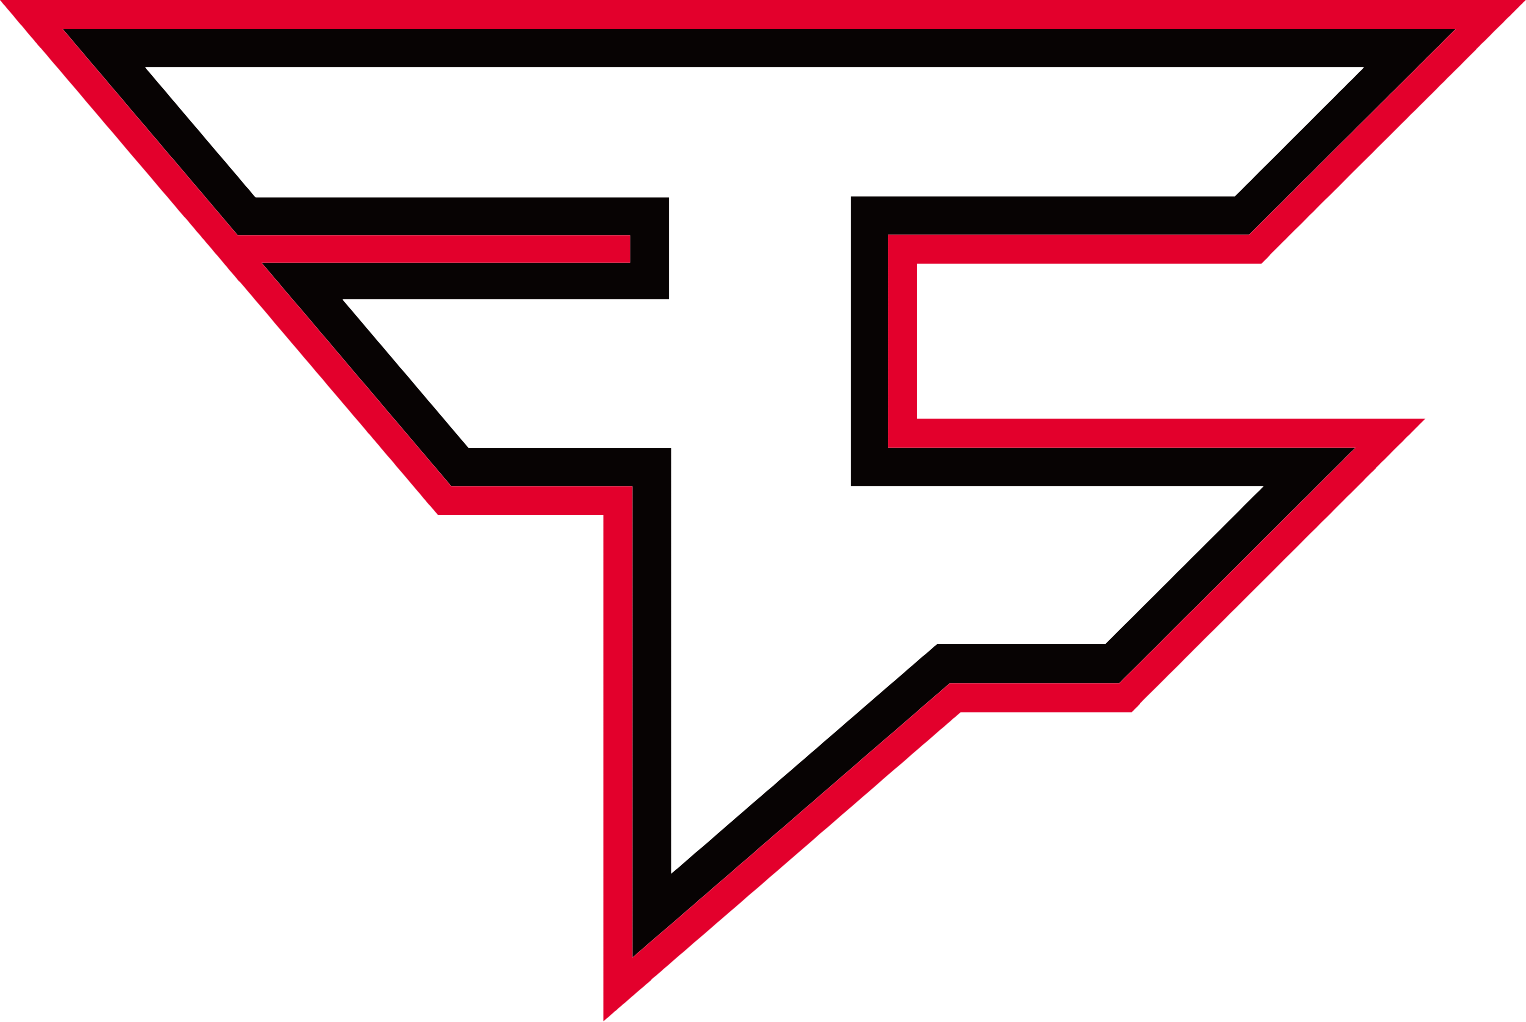 FaZe Clan logo pour fonds sombres (PNG transparent)